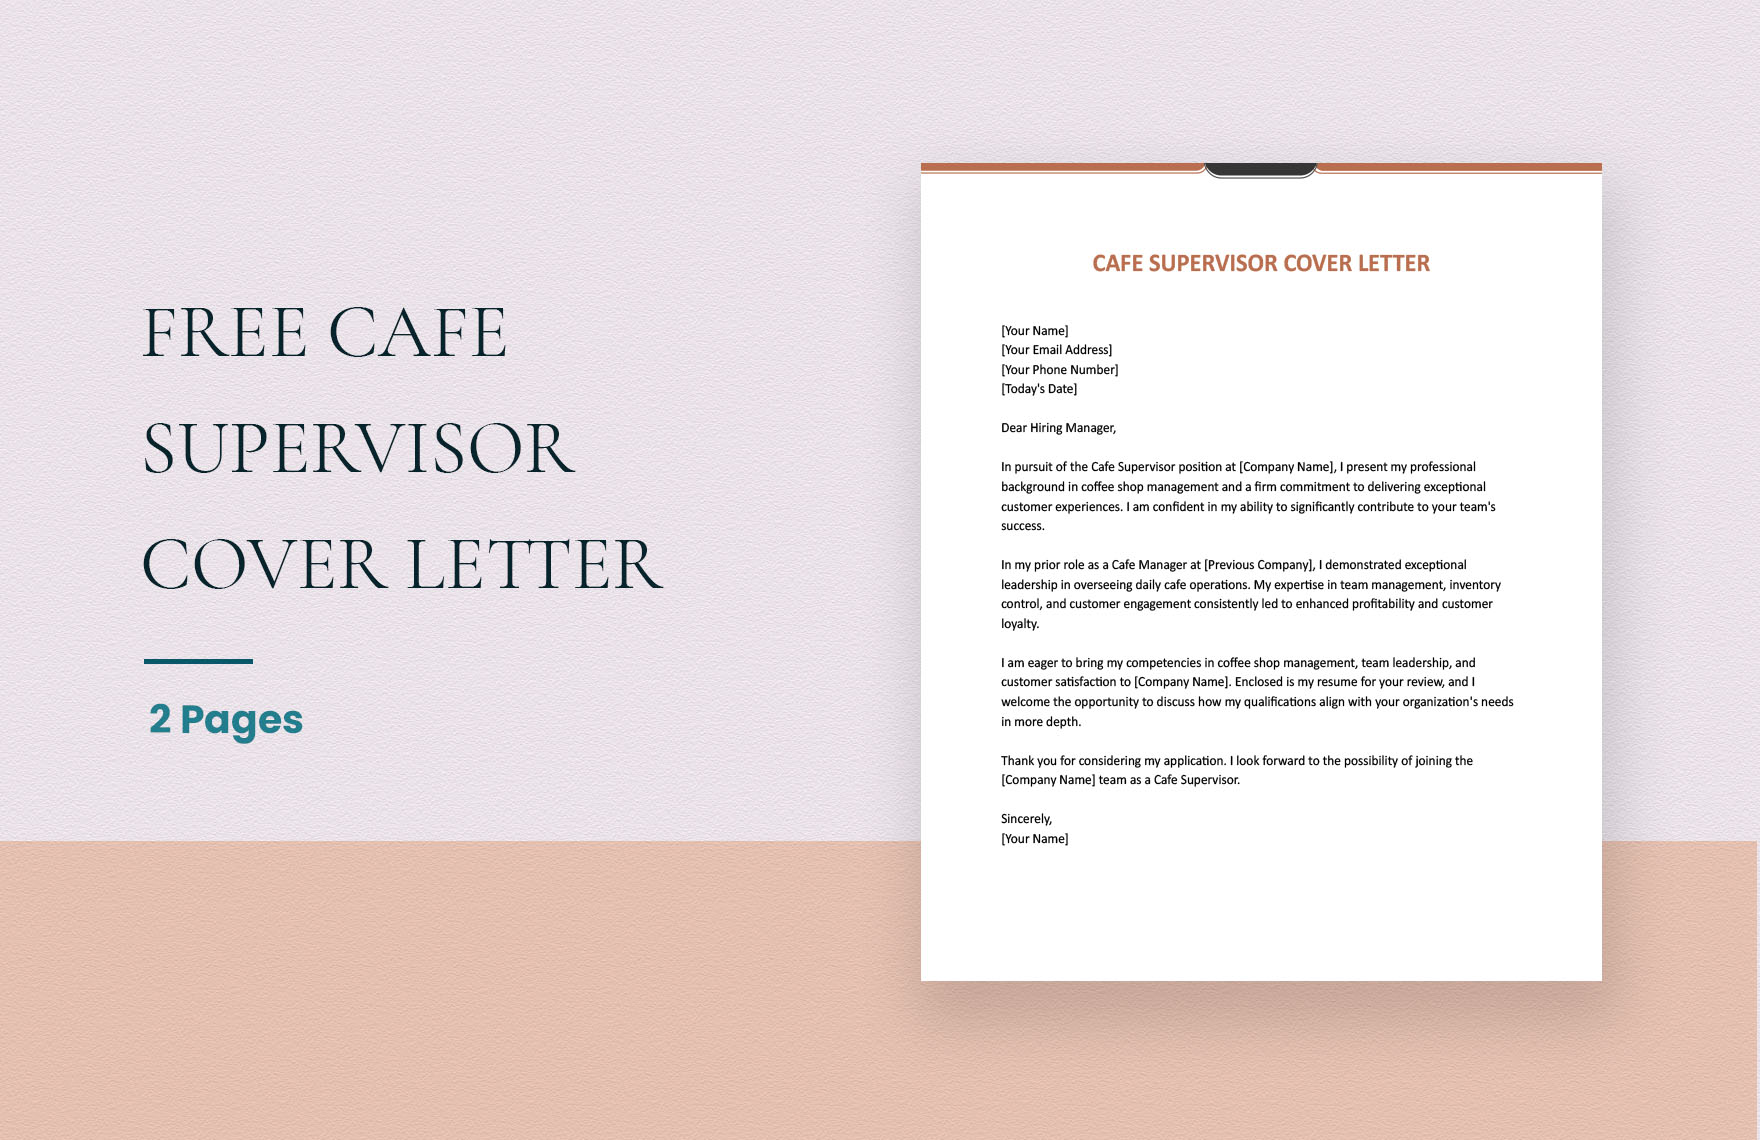 Cafe Supervisor Cover Letter in Word